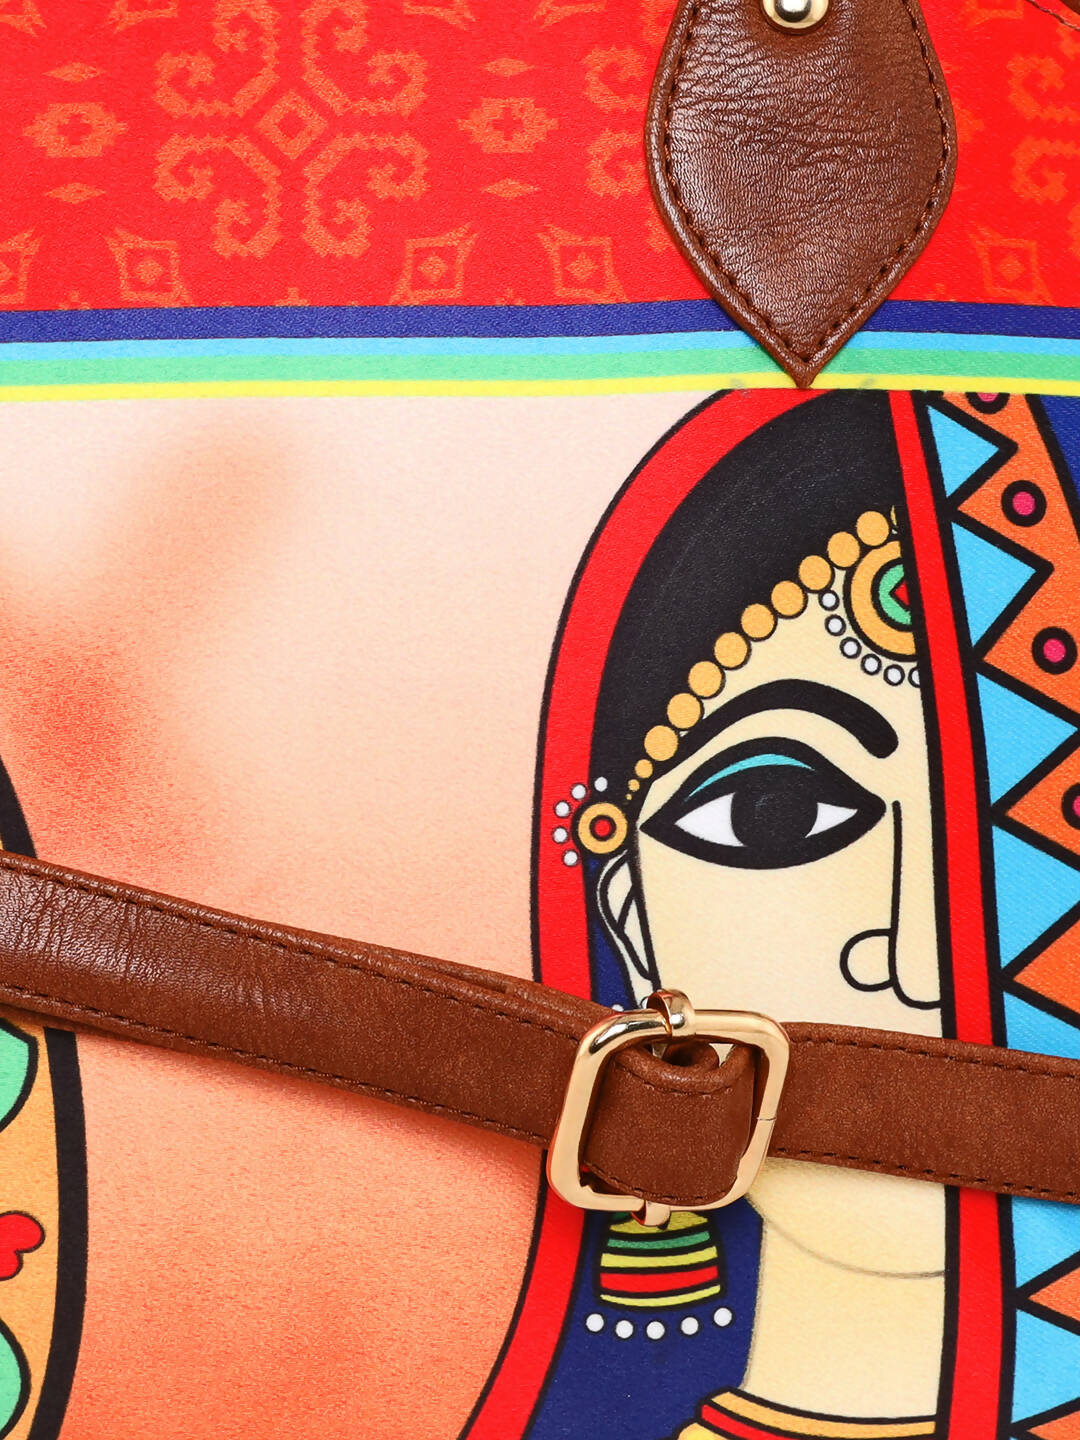 All Things Sundar Multicolor Sling Bag MOBILE POUCH M03-162 Multicolor -  Price in India | Flipkart.com